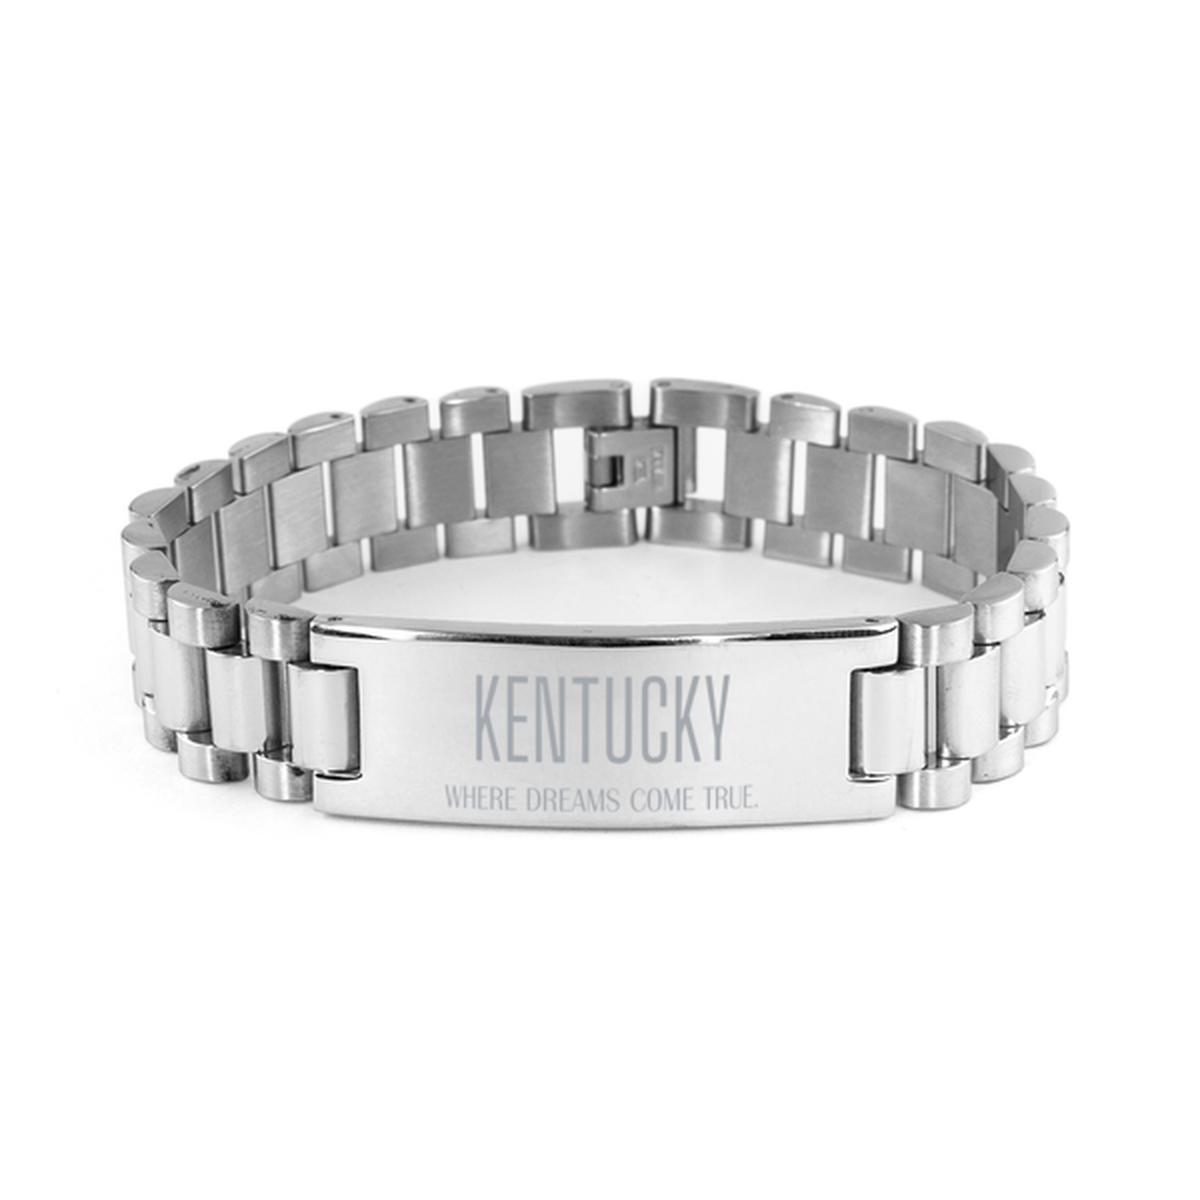 Love Kentucky State Ladder Stainless Steel Bracelet, Kentucky Where dreams come true, Birthday Inspirational Gifts For Kentucky Men, Women, Friends